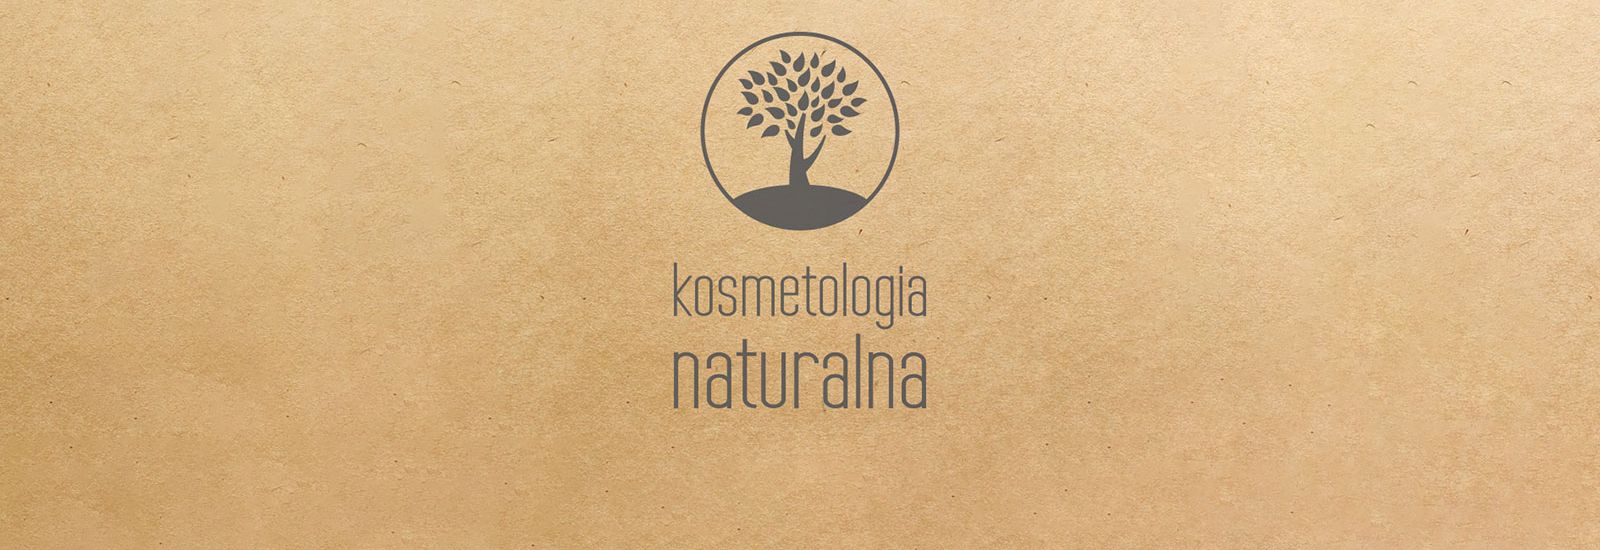 Kosmetologia Naturalna, Oława, kosmetologia-naturalna-logo